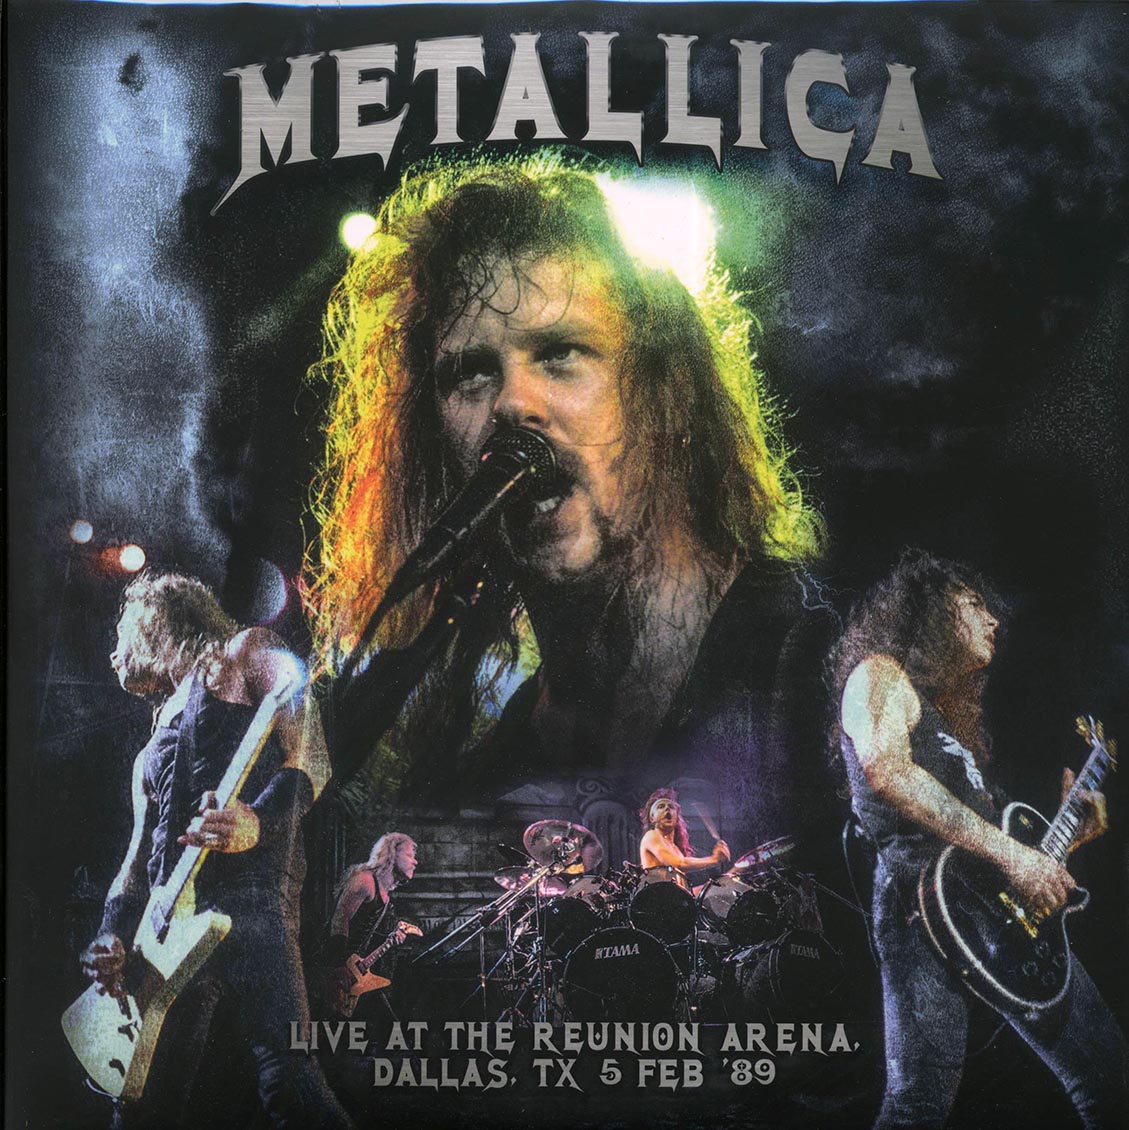 Metallica - Live At The Reunion Arena, Dallas TX 5 Feb '89 (180g) - Vinyl LP